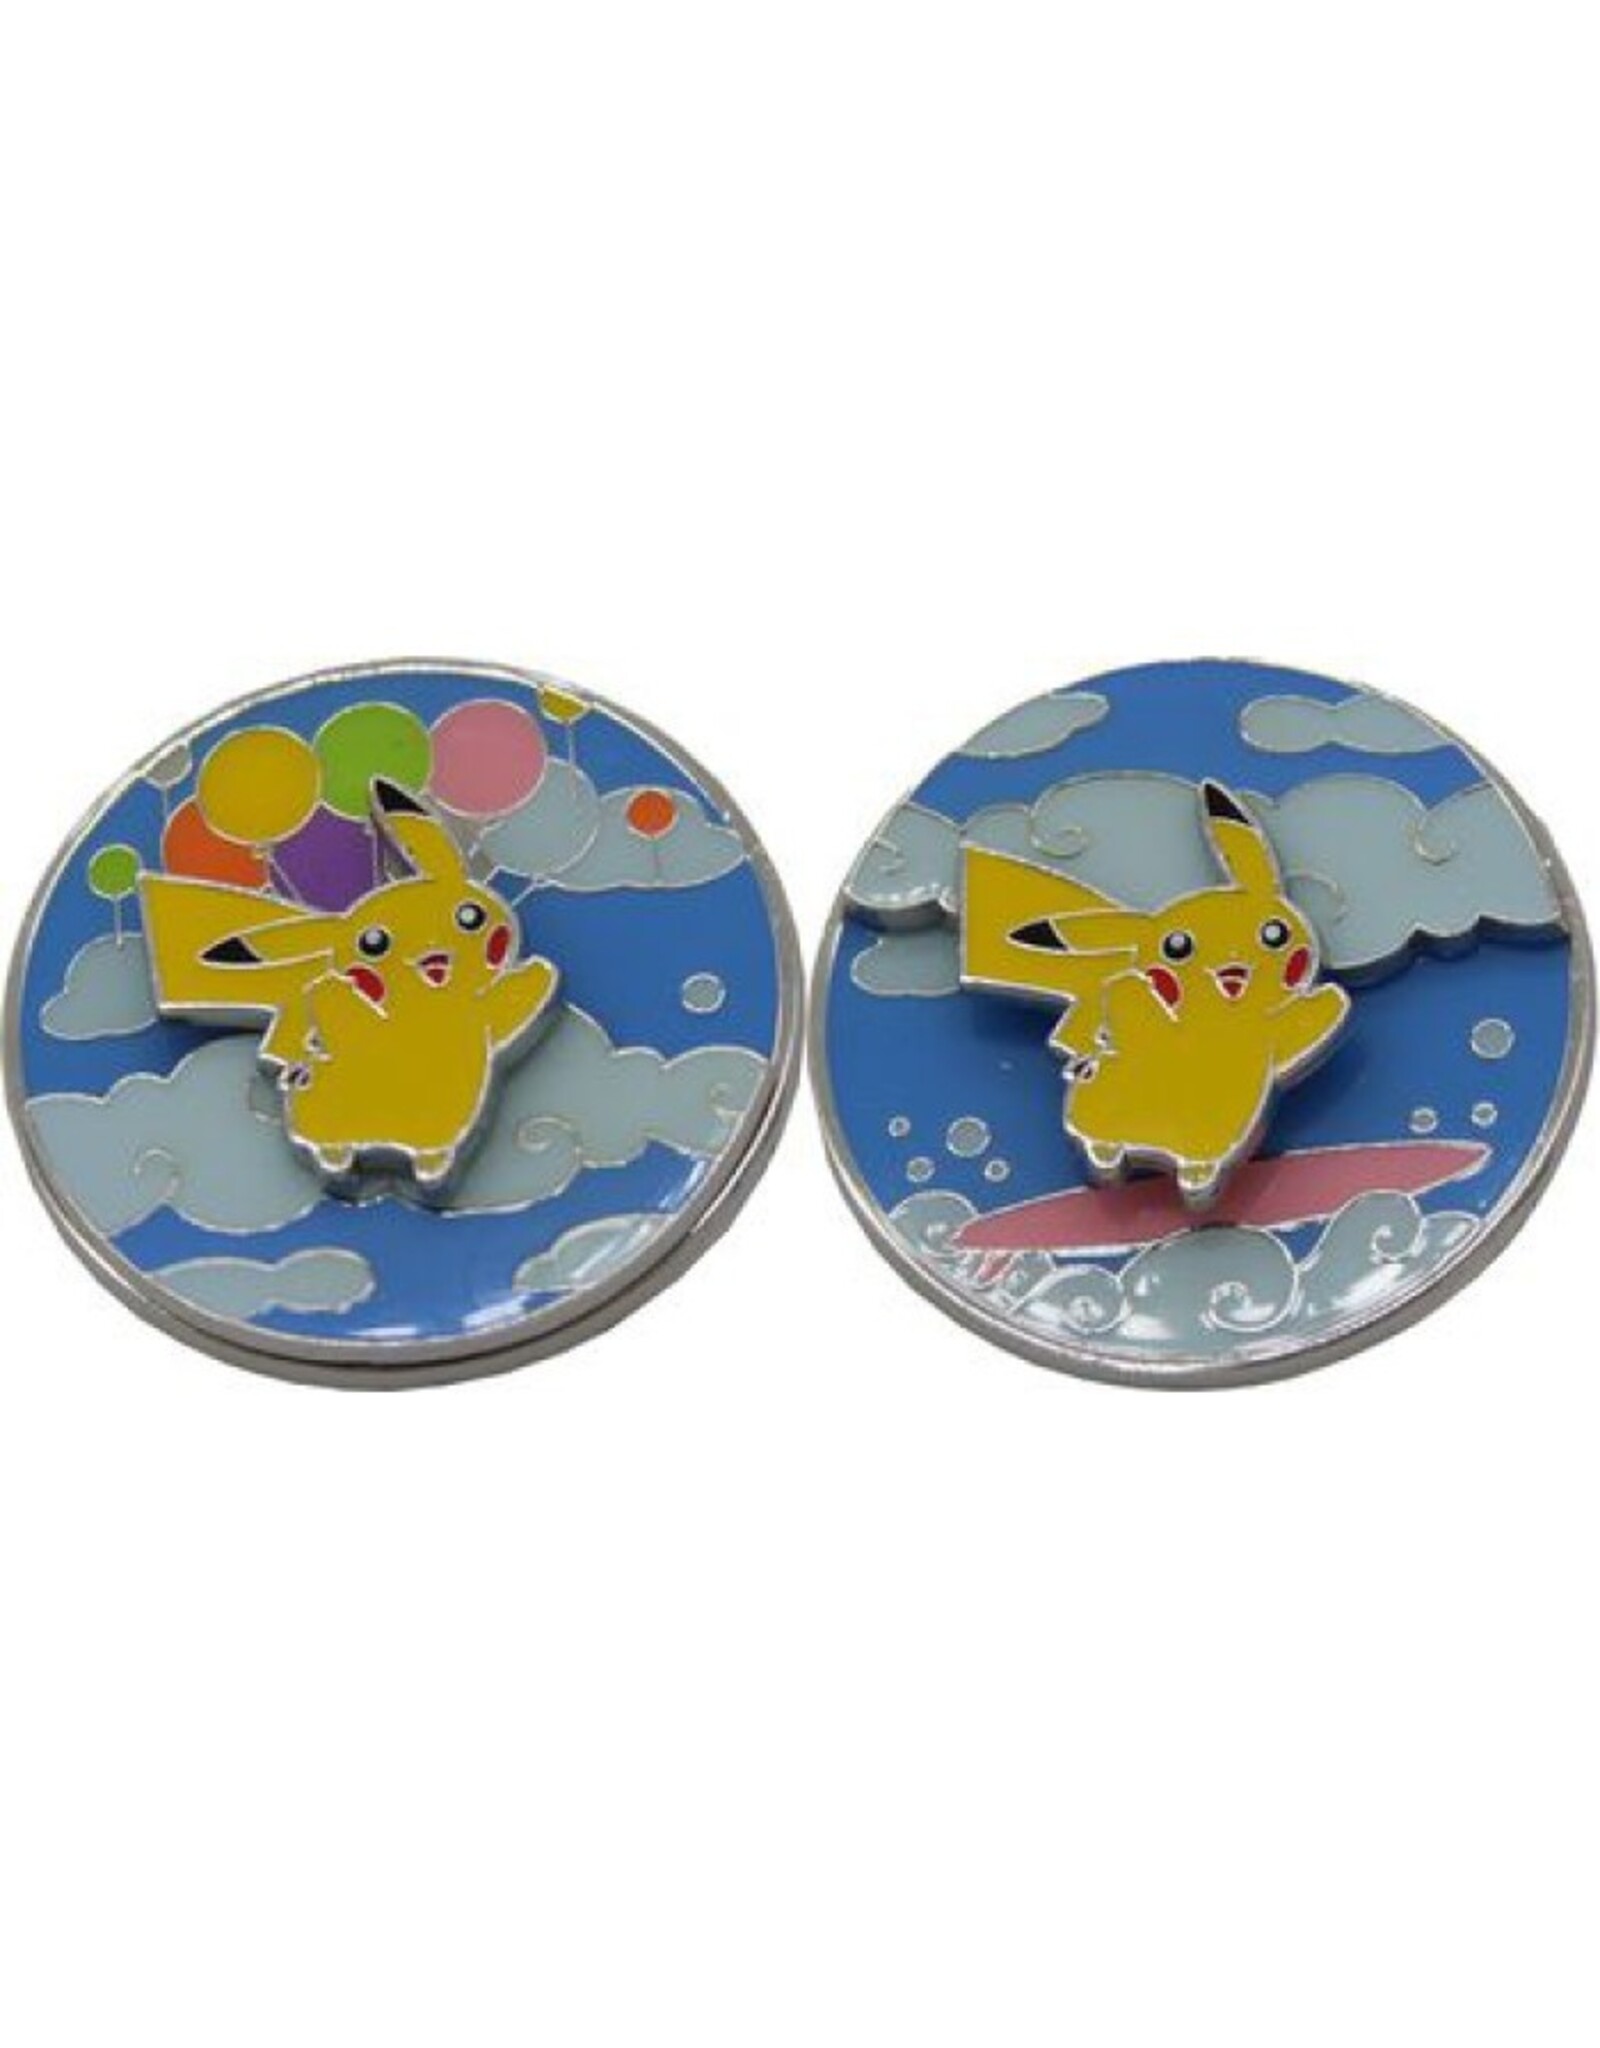 Flying & Surfing Pikachu Pin